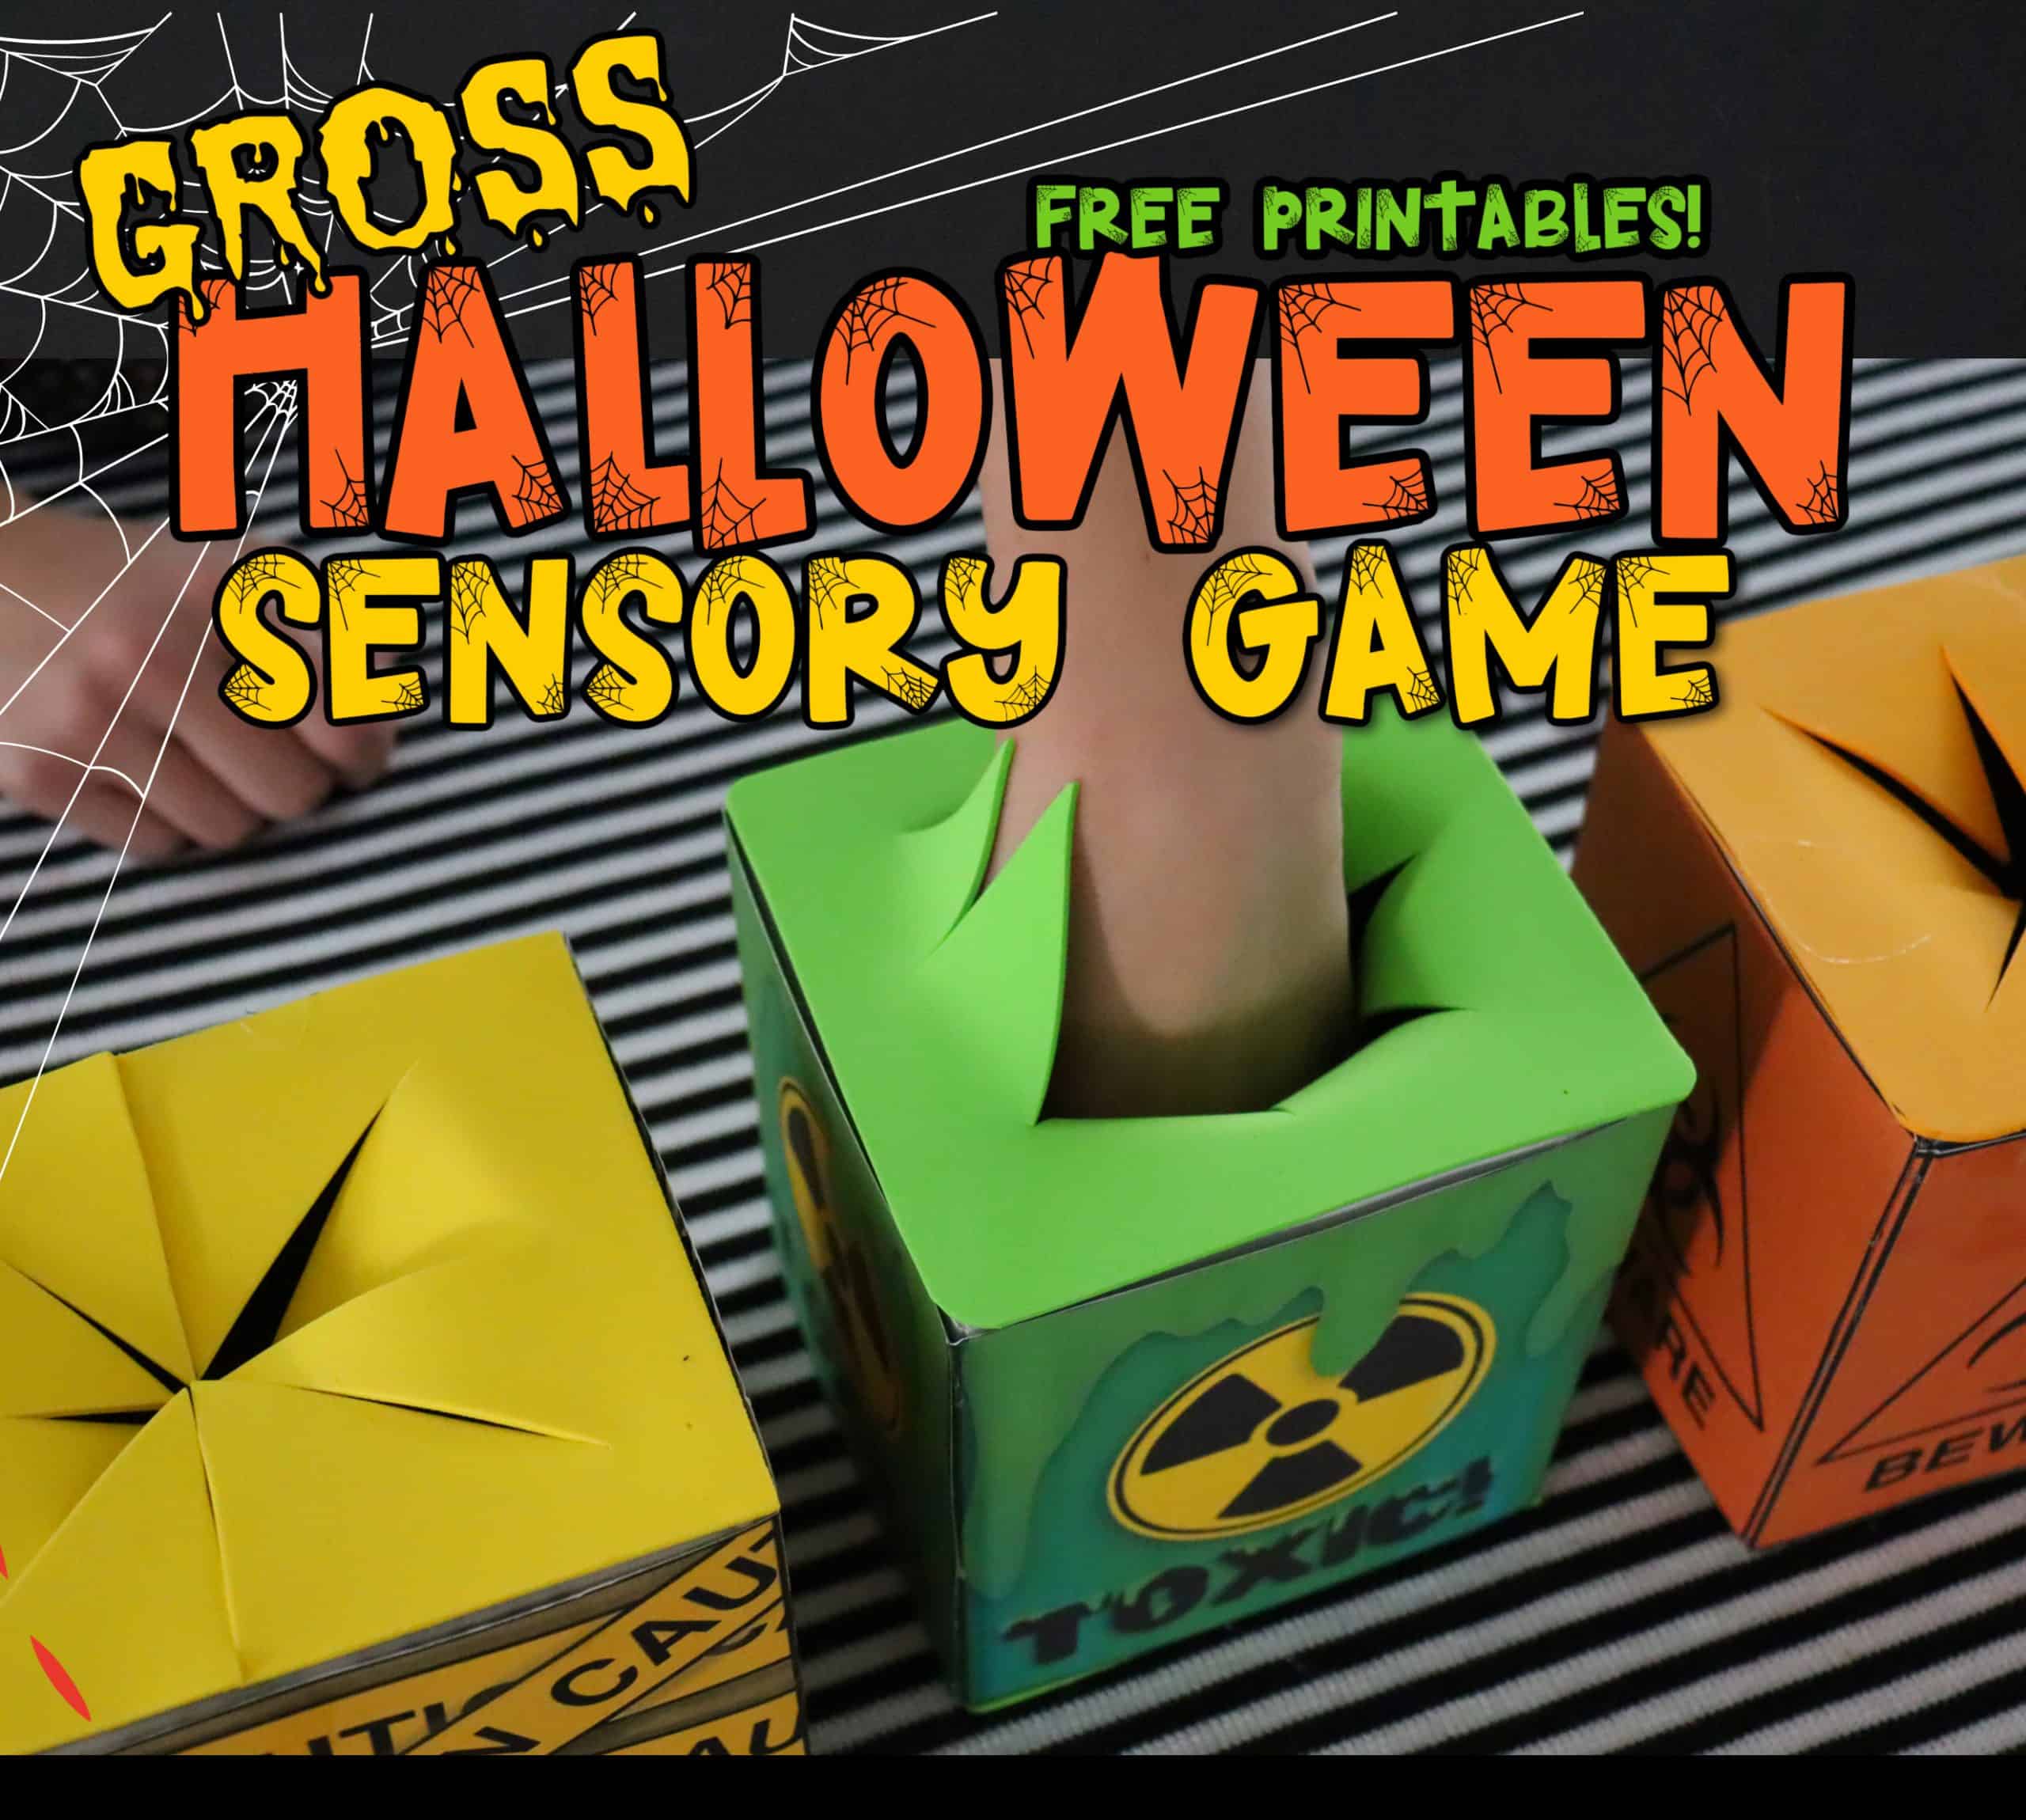 gross halloween sensory game with free printables